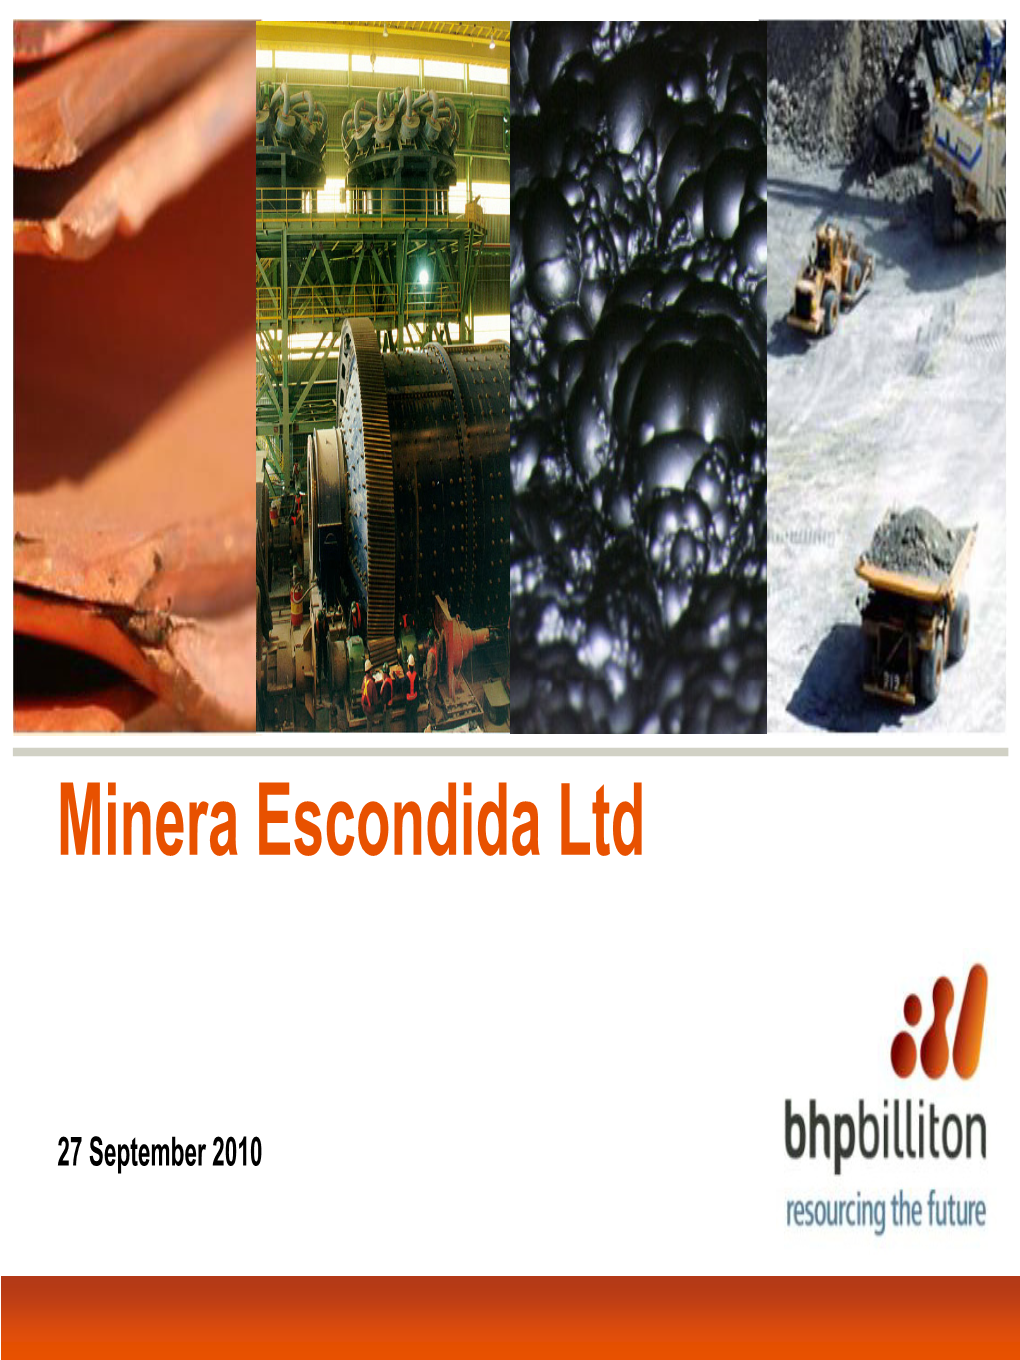 BHP Billiton's Minera Escondida Ltd's Operations